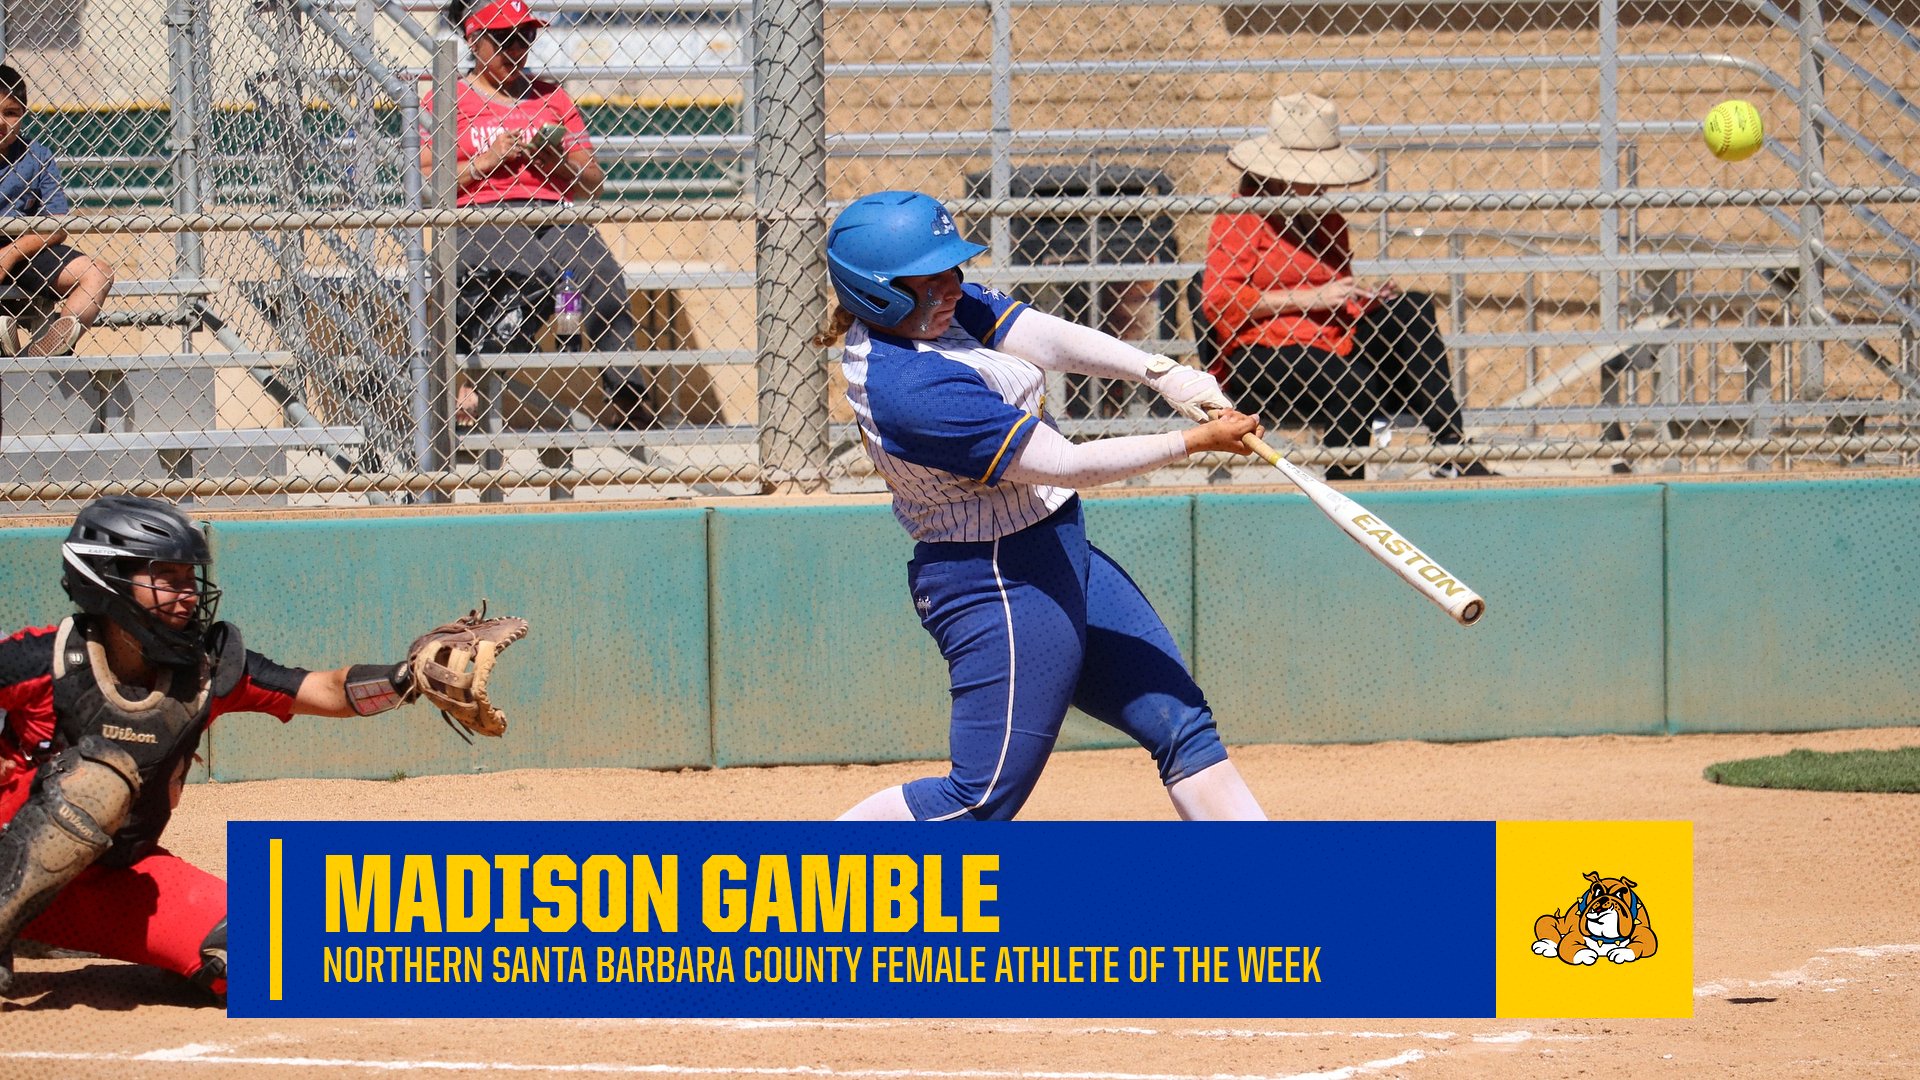 Gamble Named as Northern Santa Barbara County Female Athlete of the Week